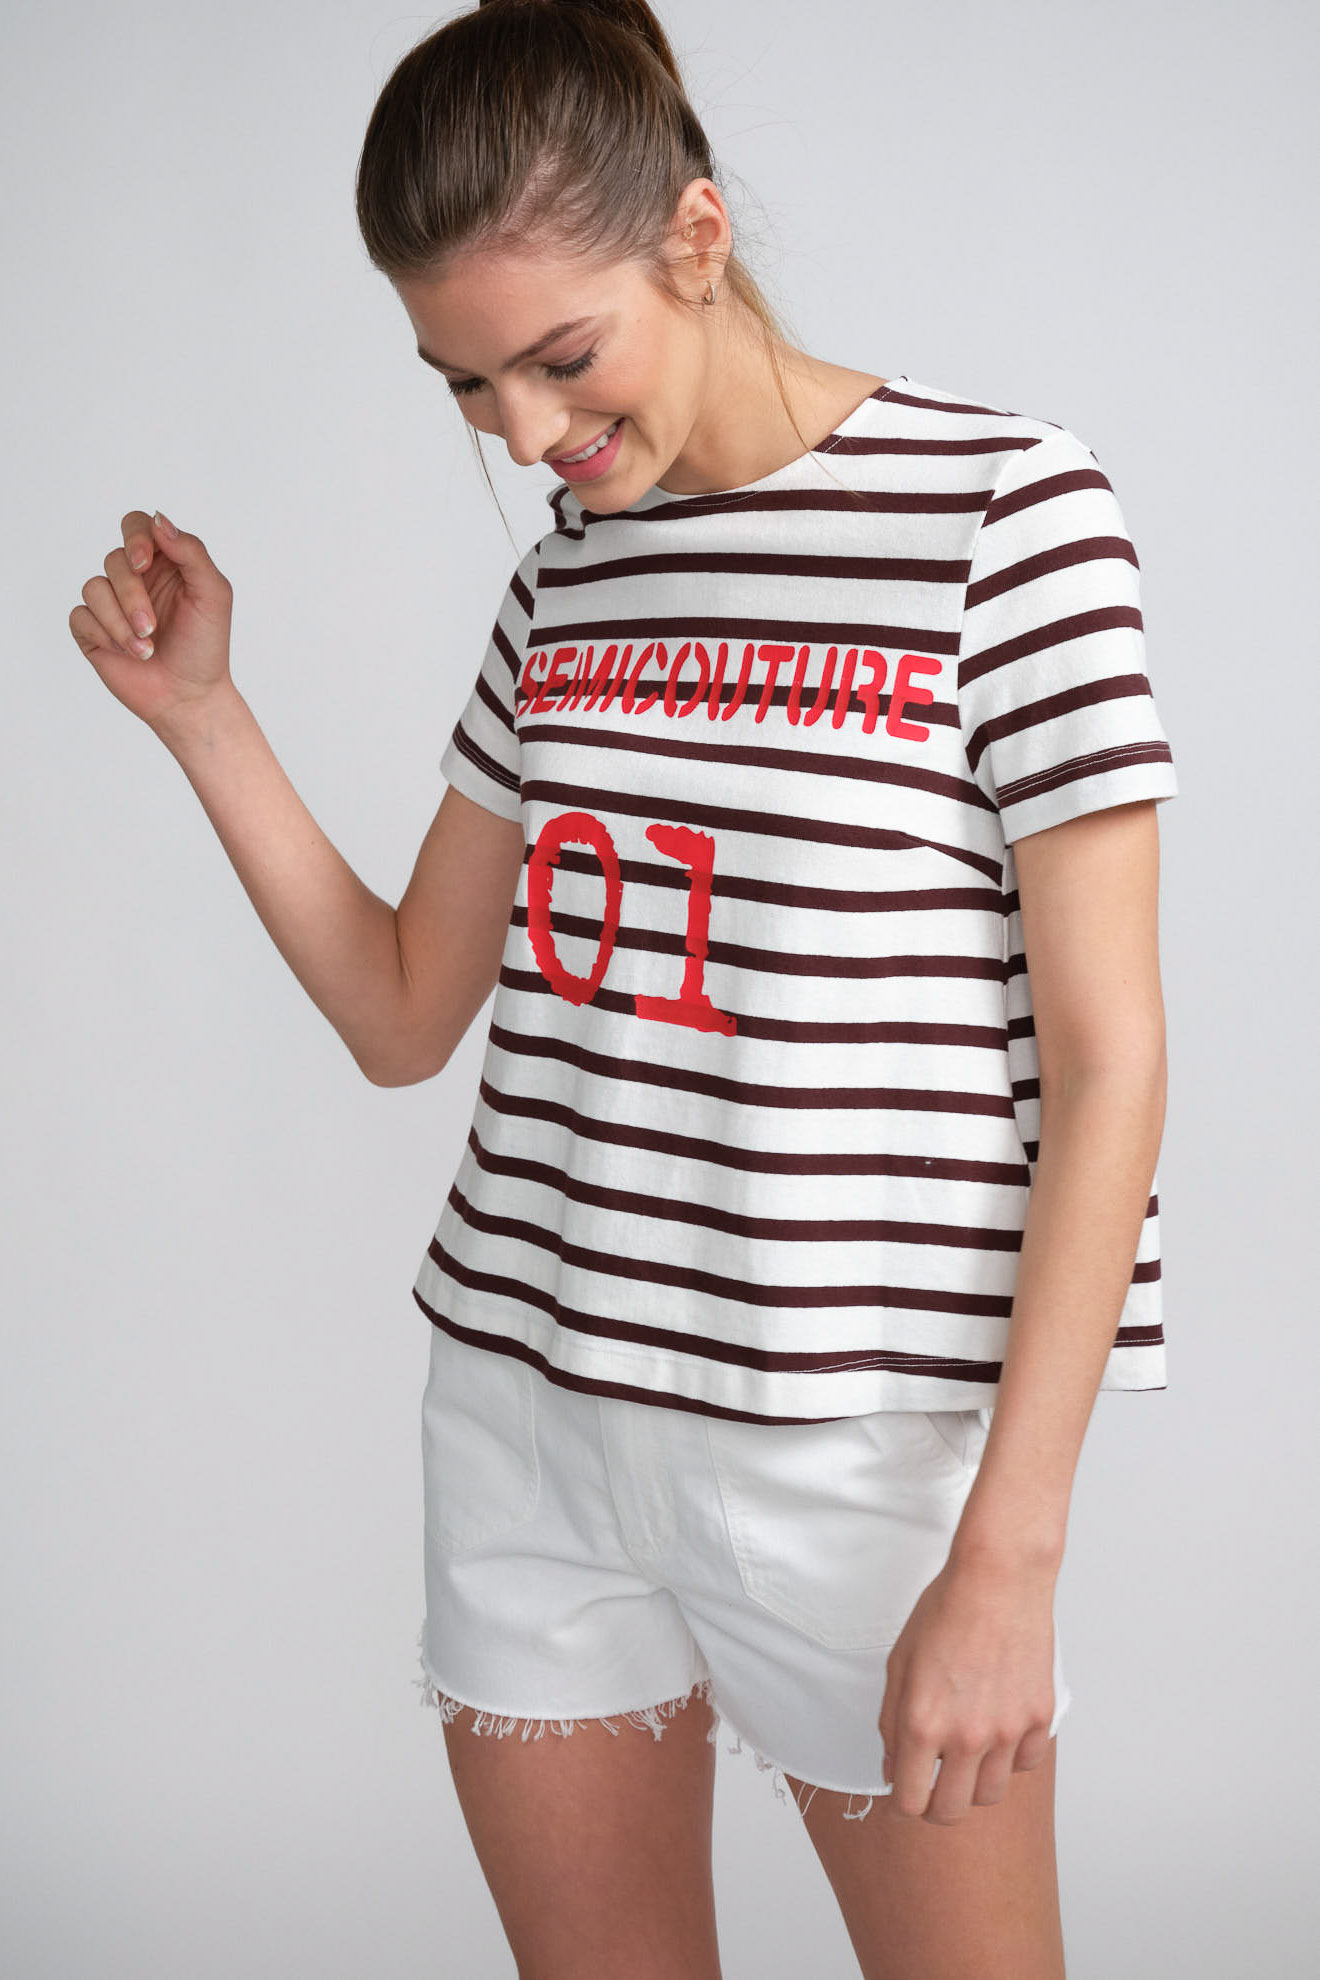 Semicouture Striped Logo Shirt 36